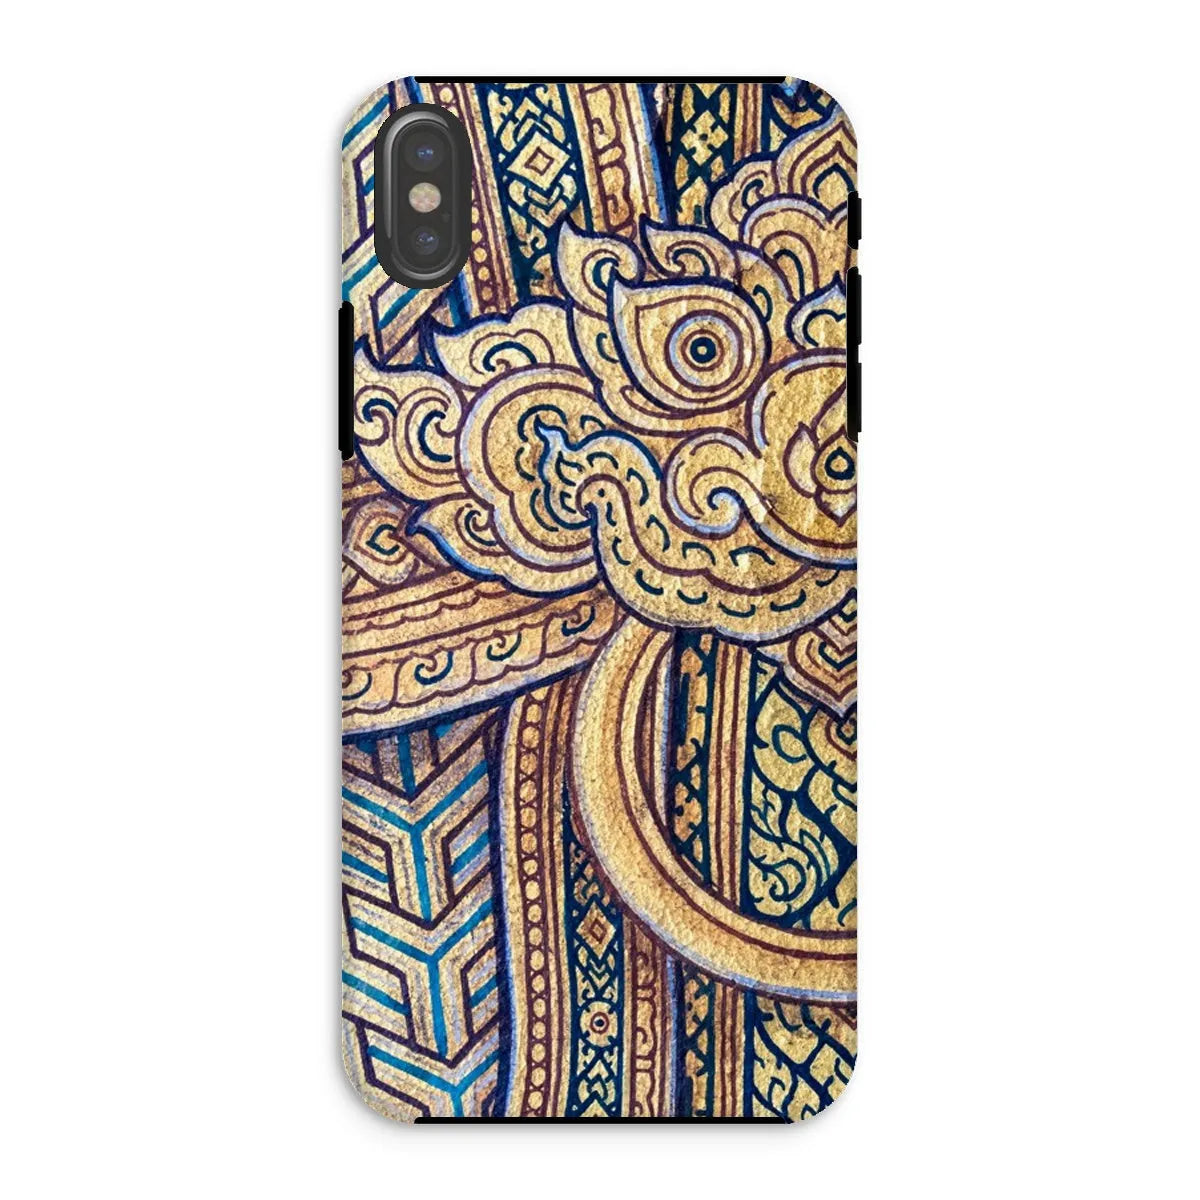 Man’s Best Friend - Thai Aesthetic Art Phone Case - Iphone Xs / Matte - Mobile Phone Cases - Aesthetic Art